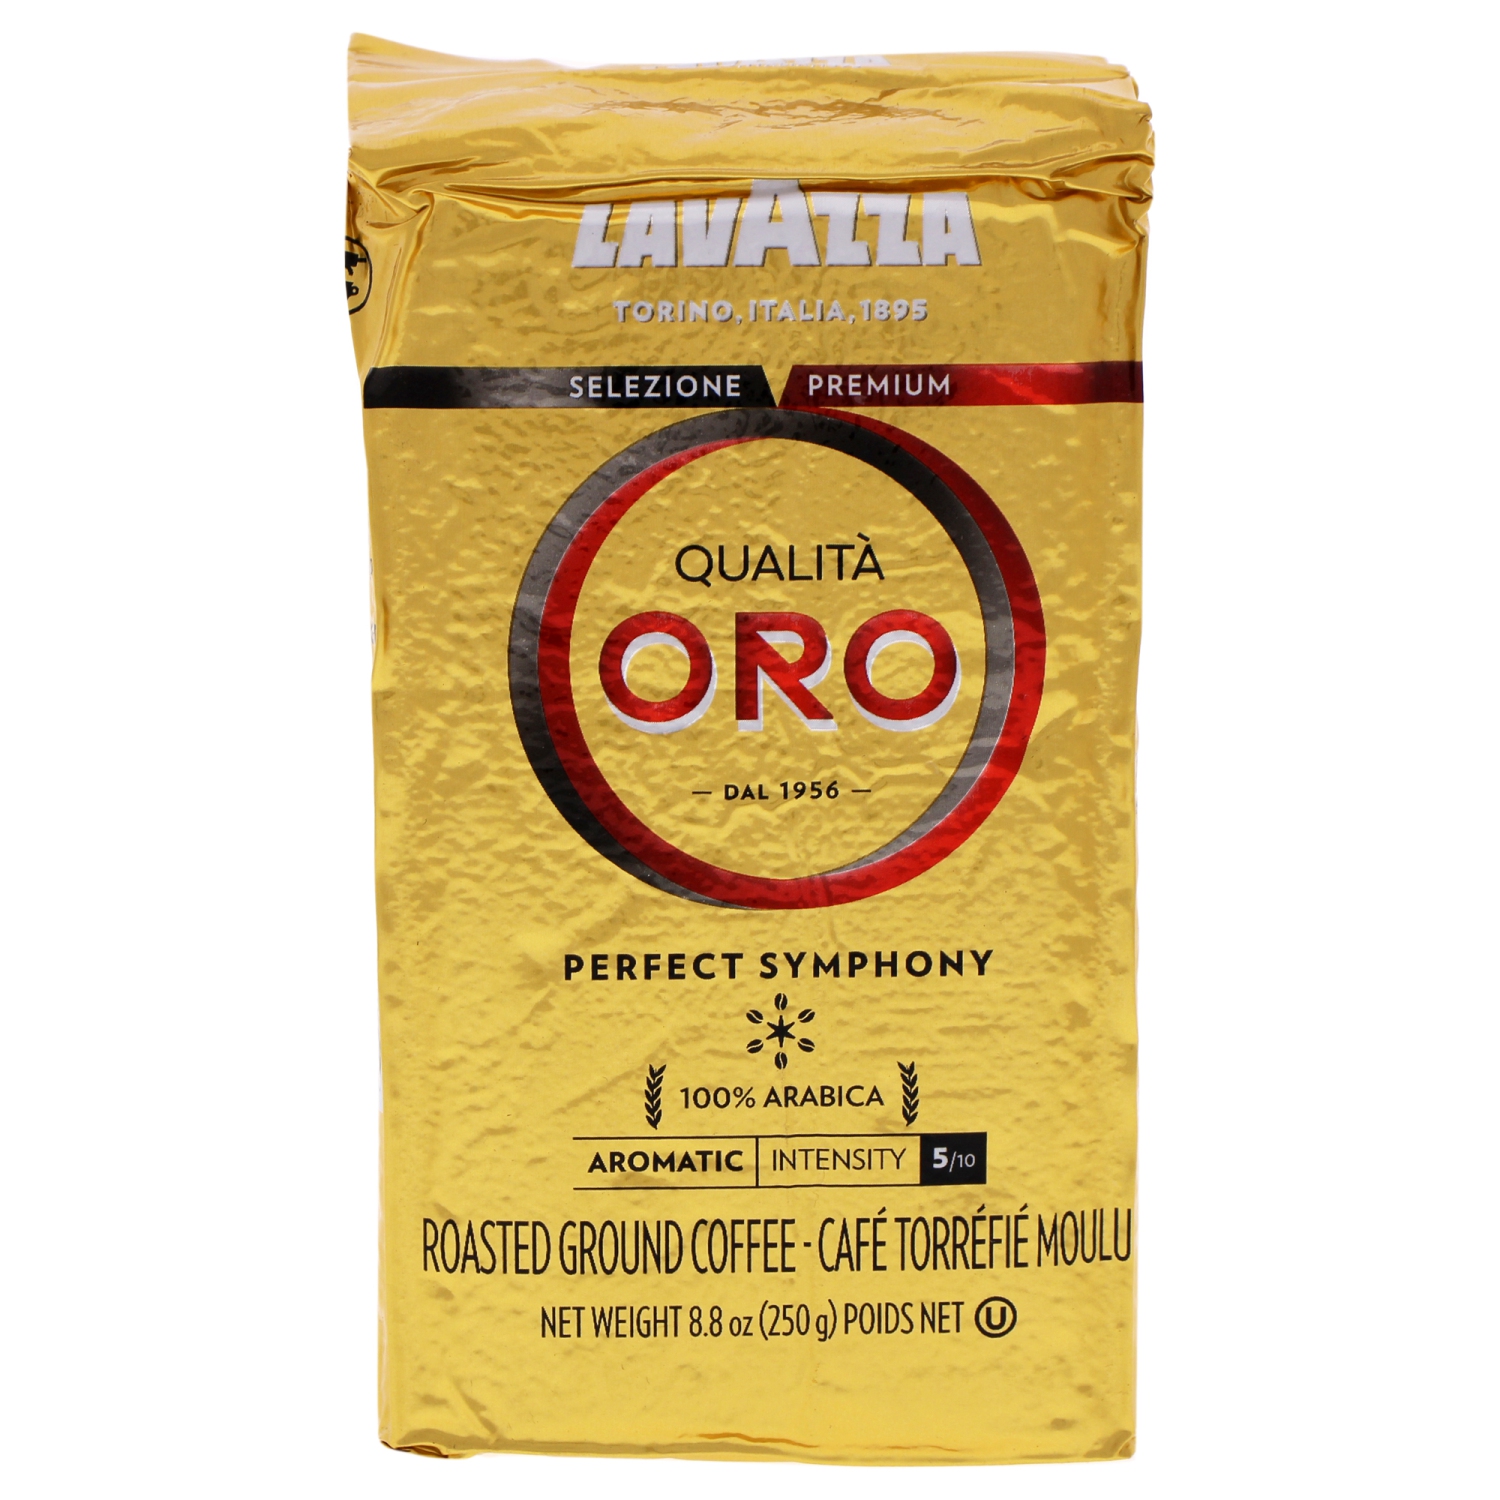 Qualita Oro Roast Ground Coffee by Lavazza for - 8.8 oz Coffee